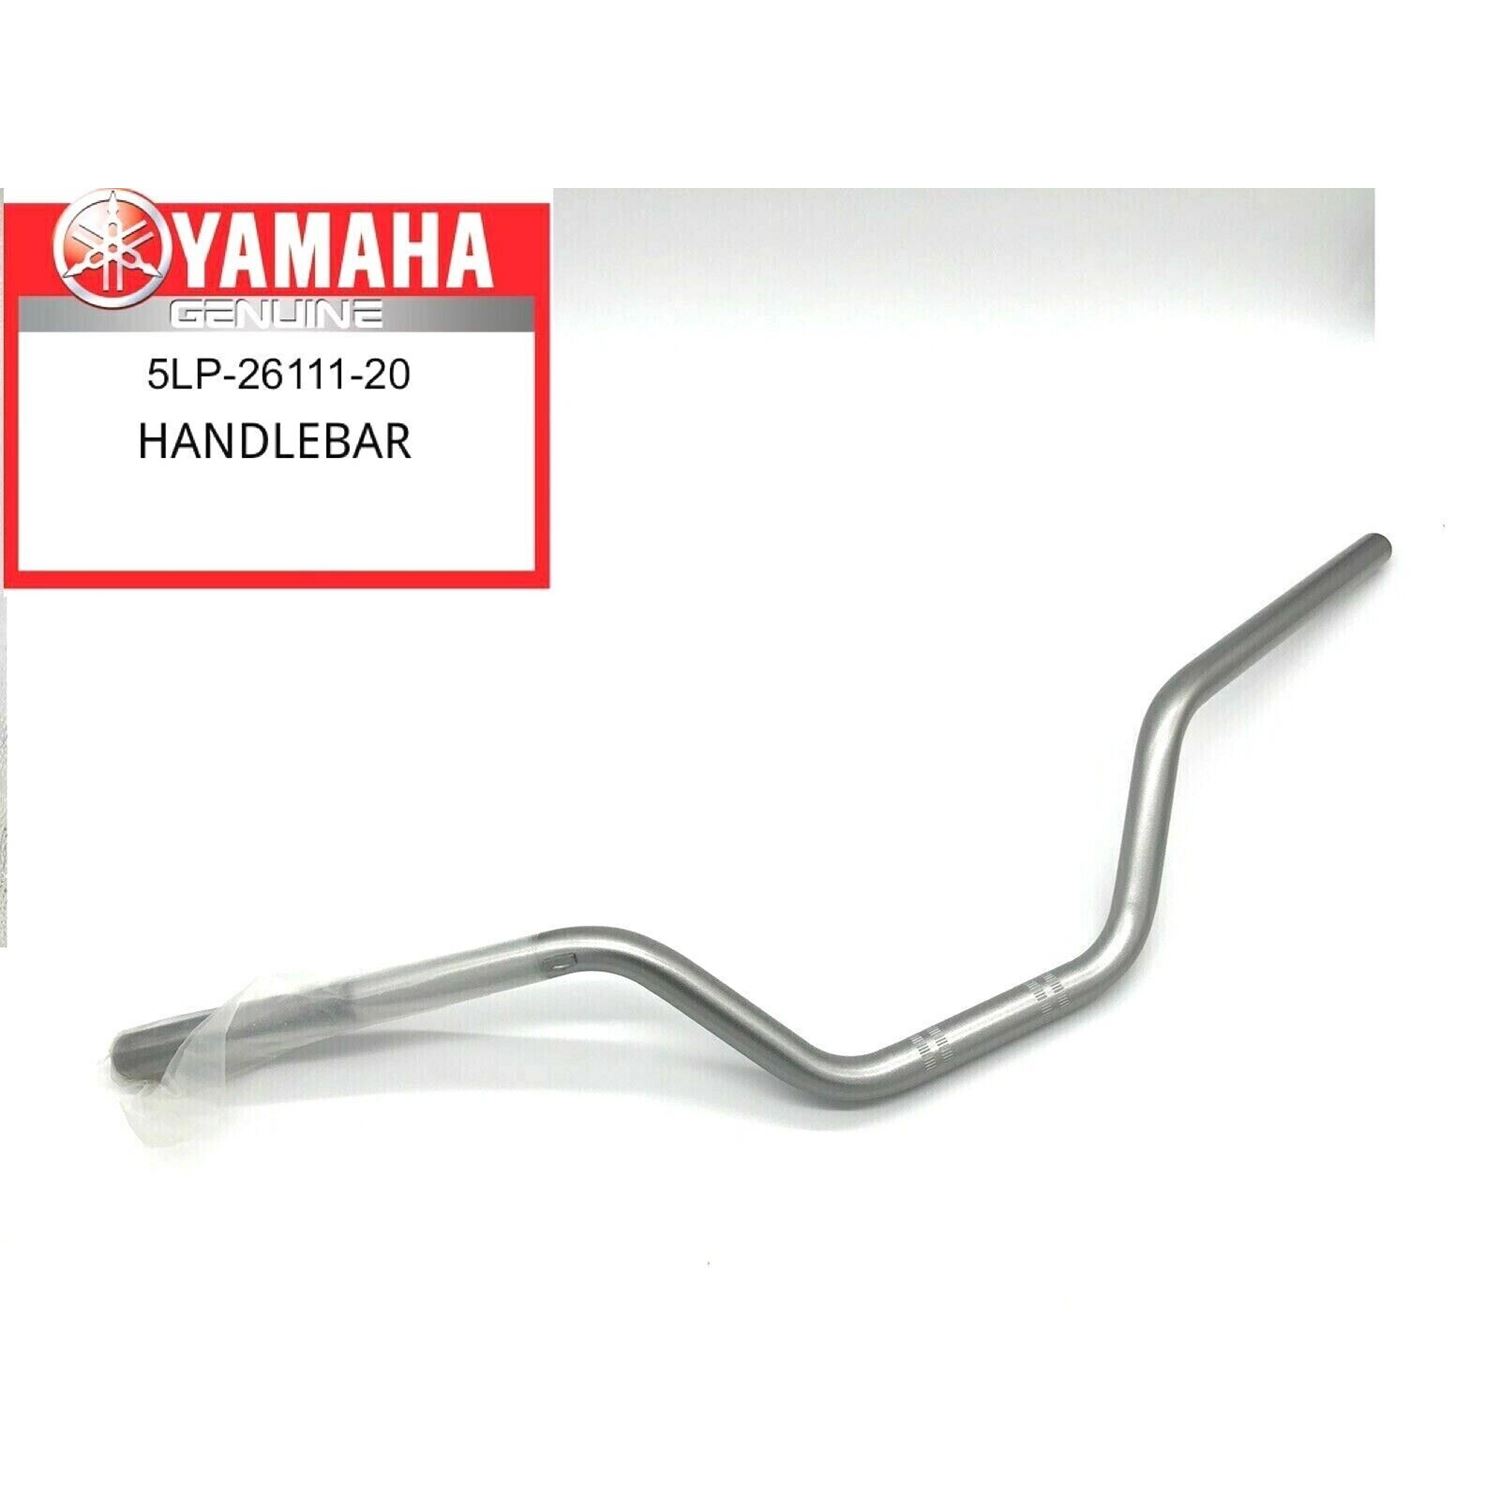 OEM Yamaha handlebars 7/8" silver bars for Ba